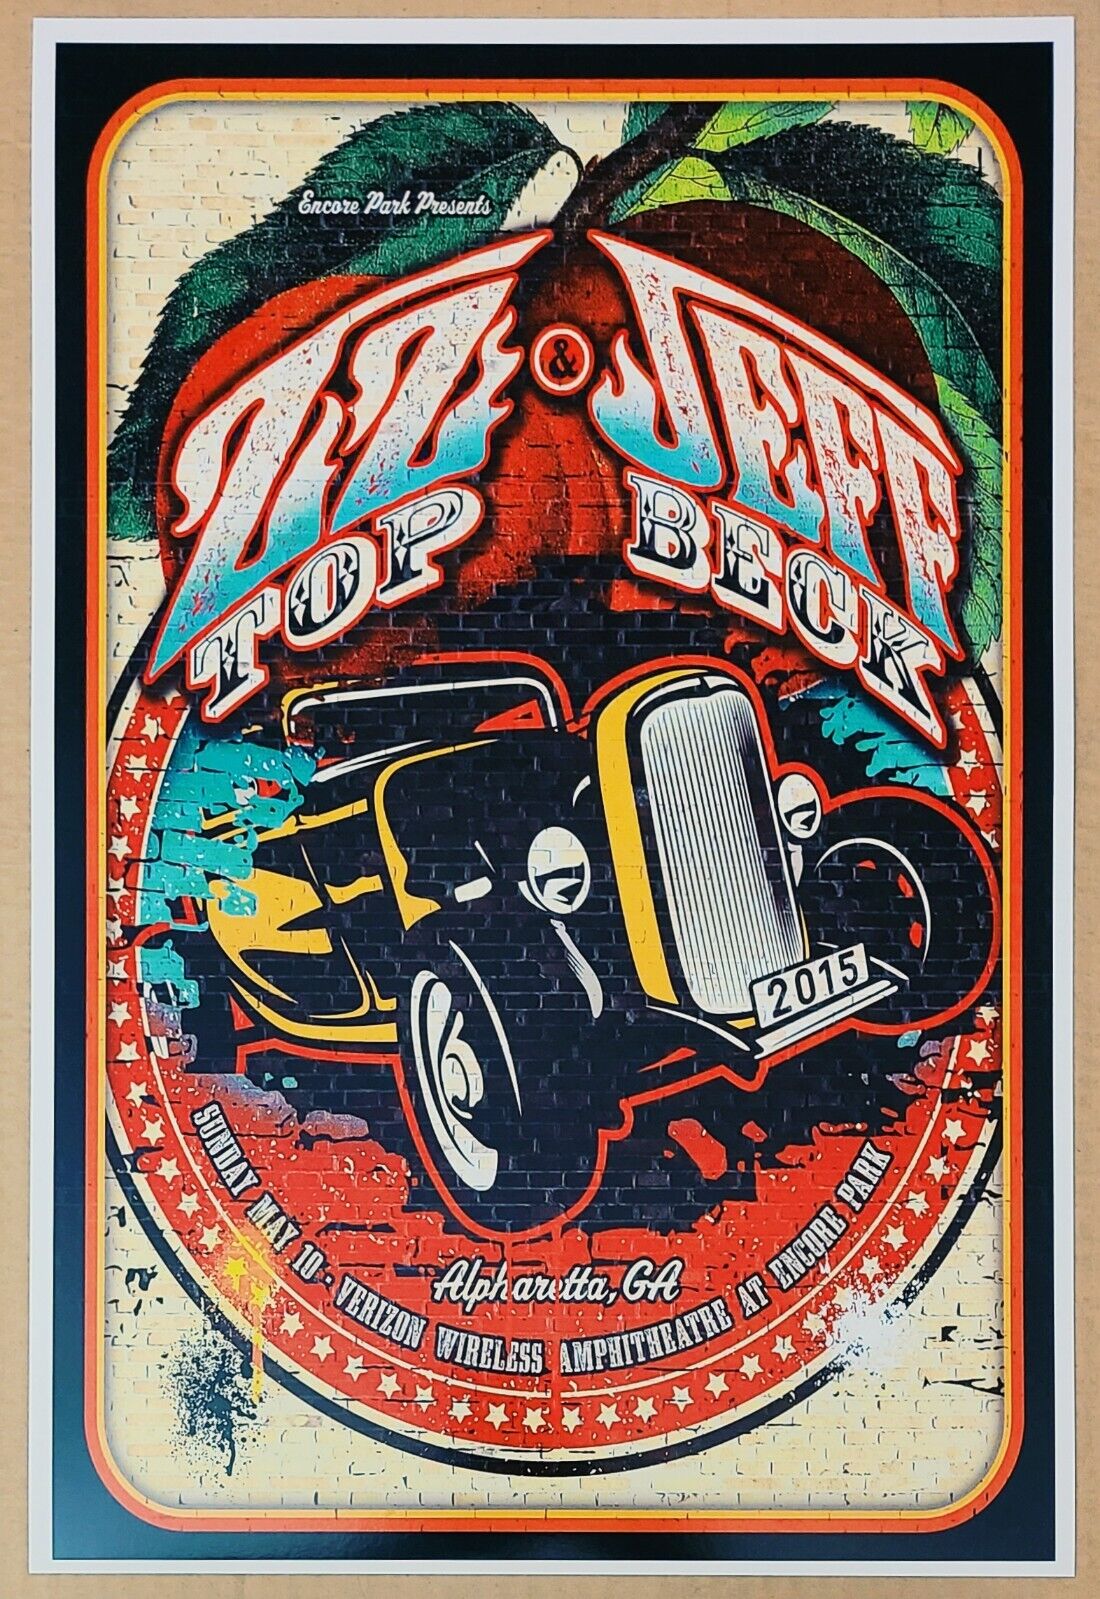 Zz Top & Jeff Beck Alpharetta Georgia May 10, 2015 Glossy 12x18 Concert Poster